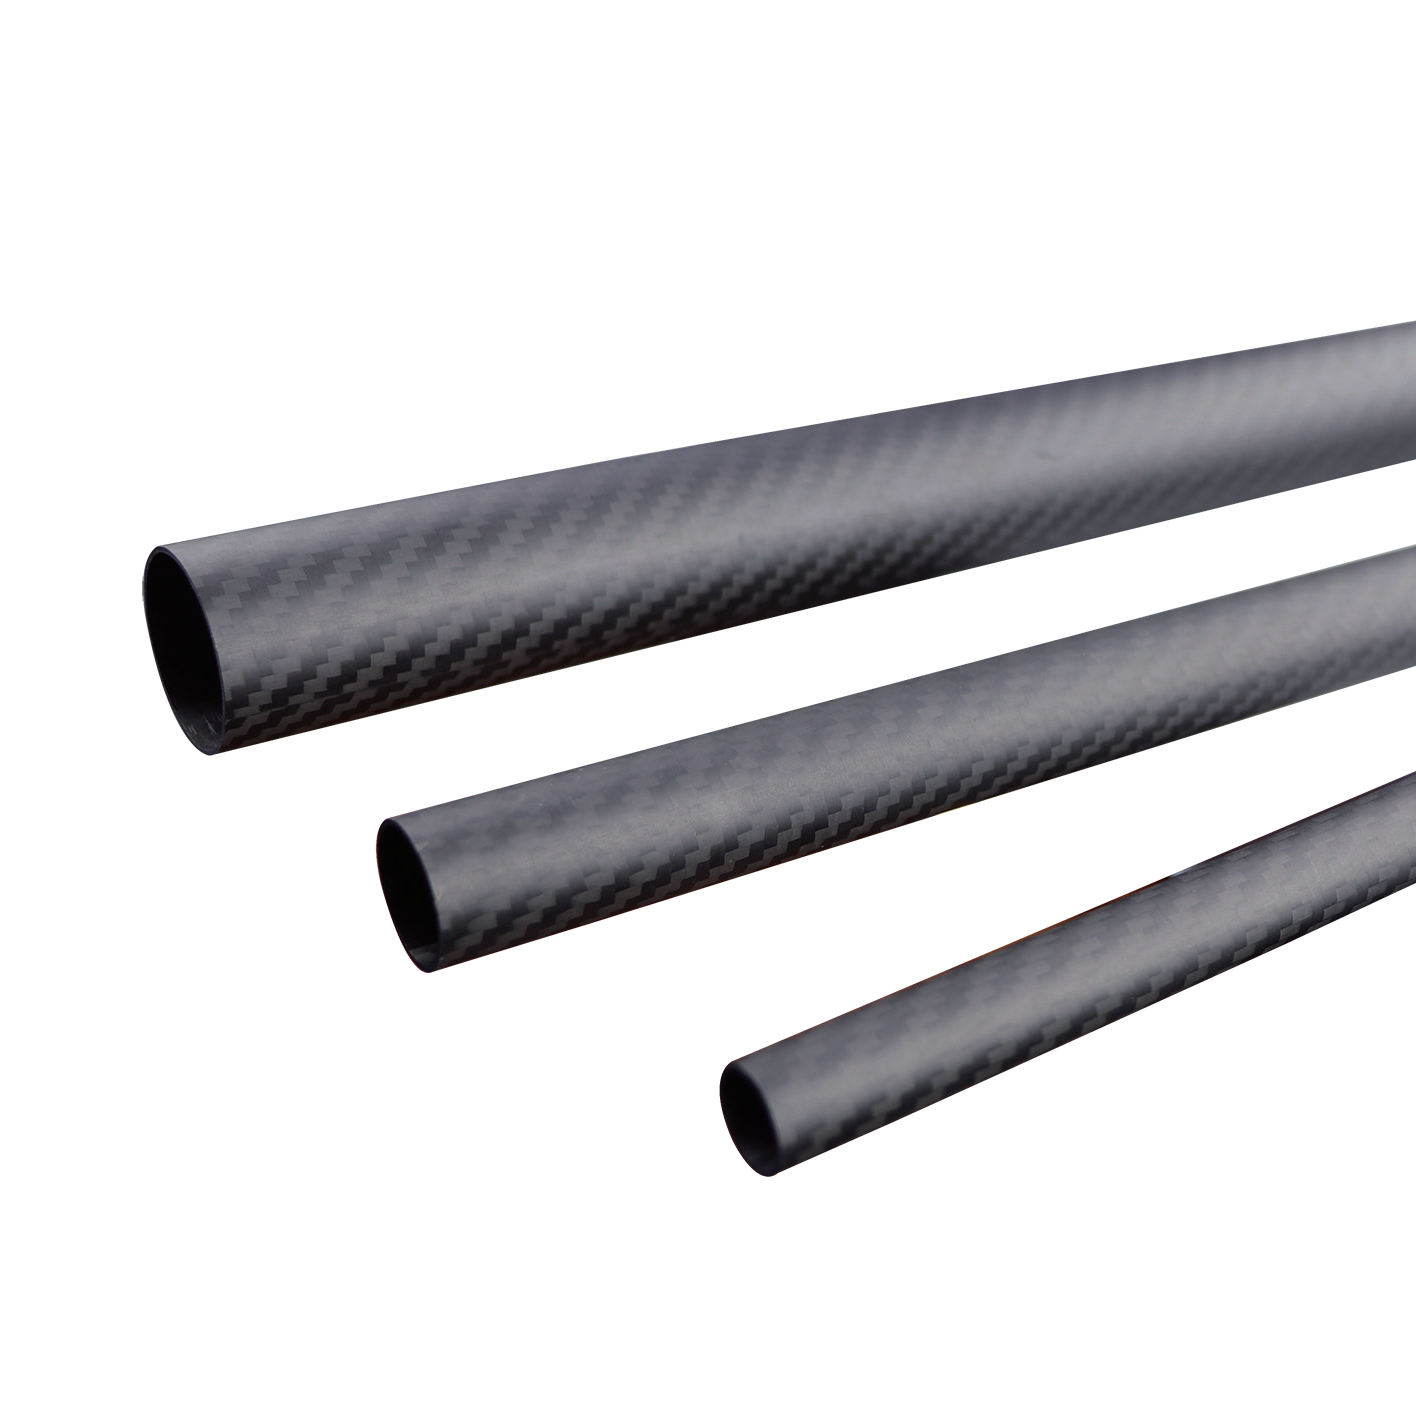 Carbon fiber round tubealuminum round tubestainless steel round tube